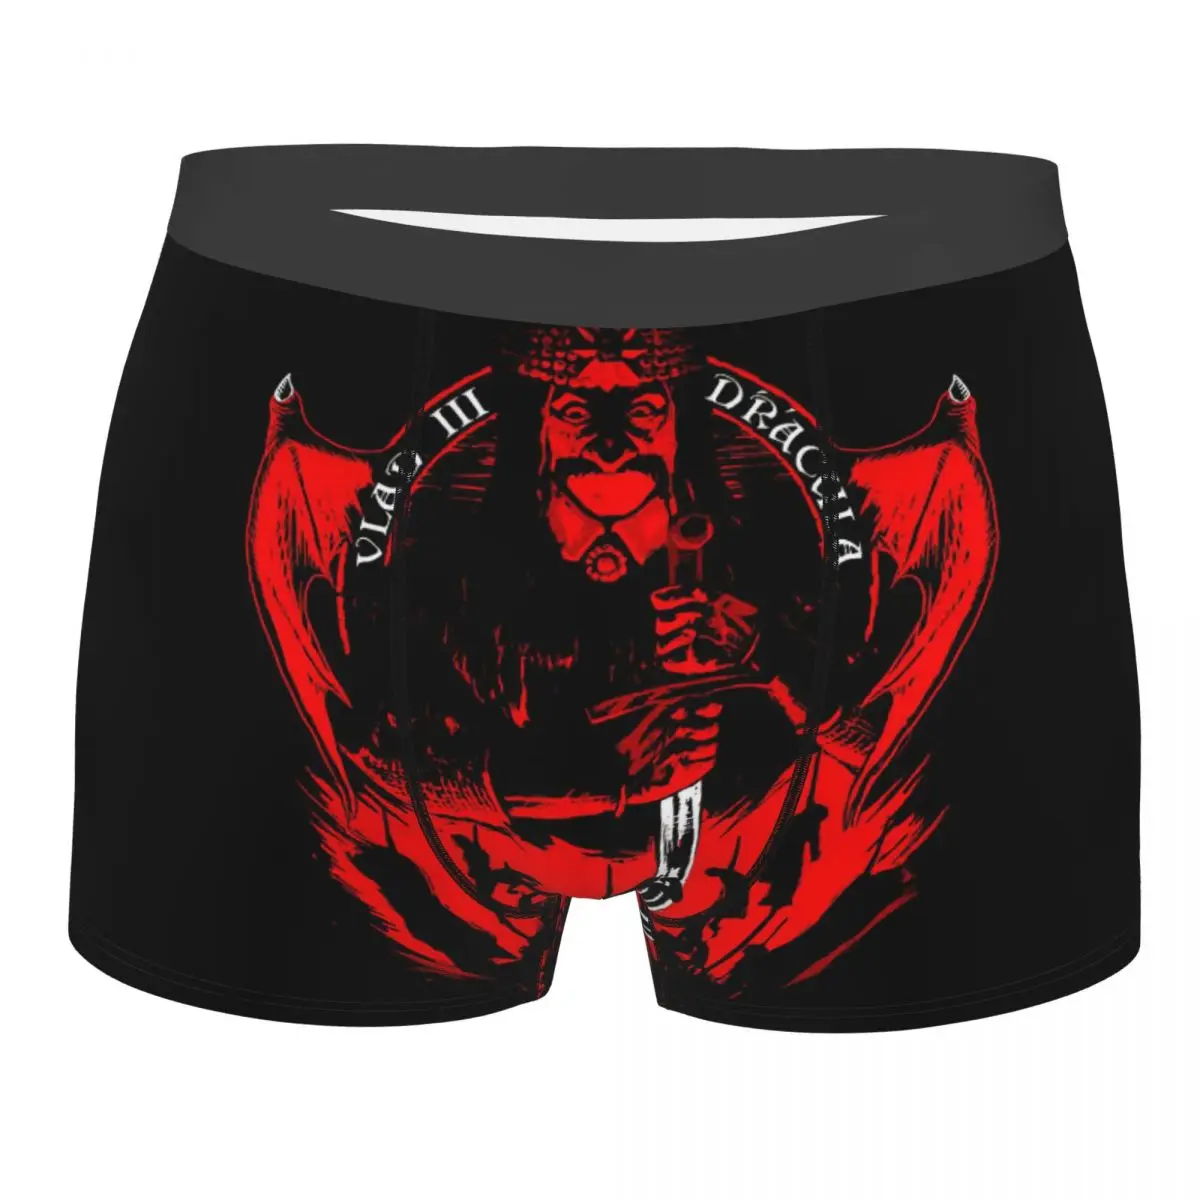 Vlad The Impaler Dracula Man'scosy Boxer Briefs Underwear Highly Breathable High Quality Gift Idea dracula